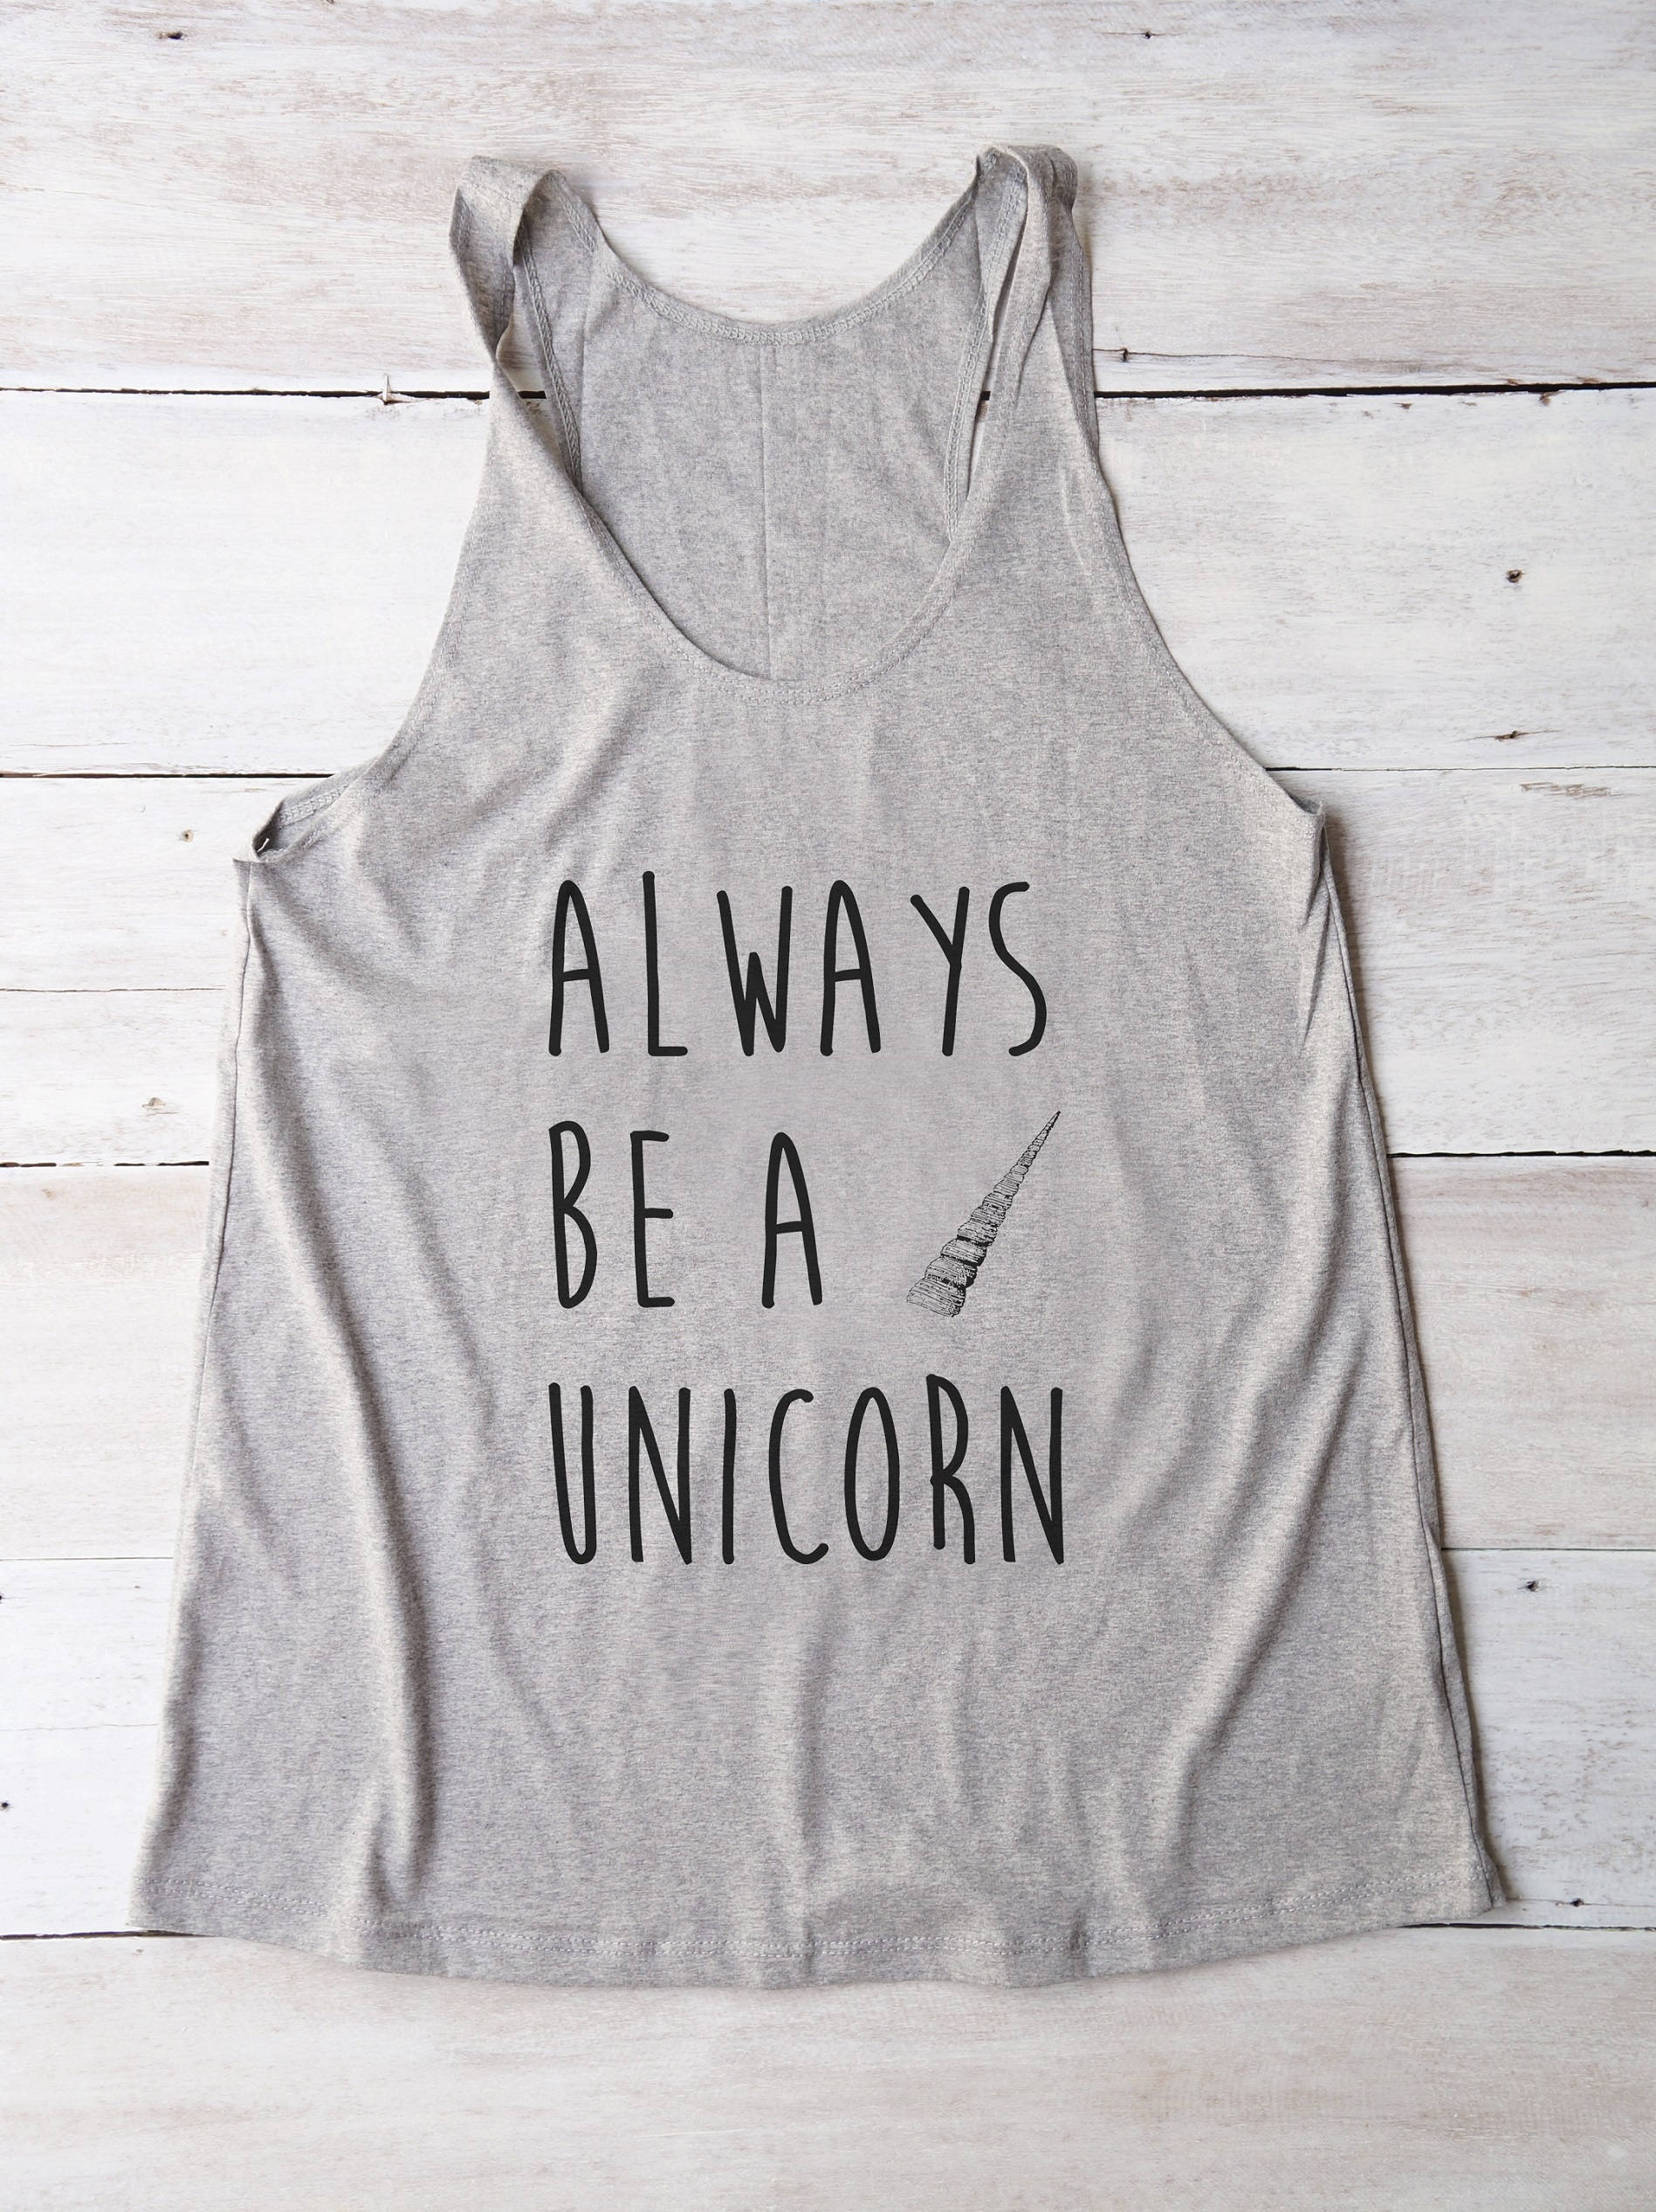 Always be a unicorn shirt slogan shirt ladies graphic tee